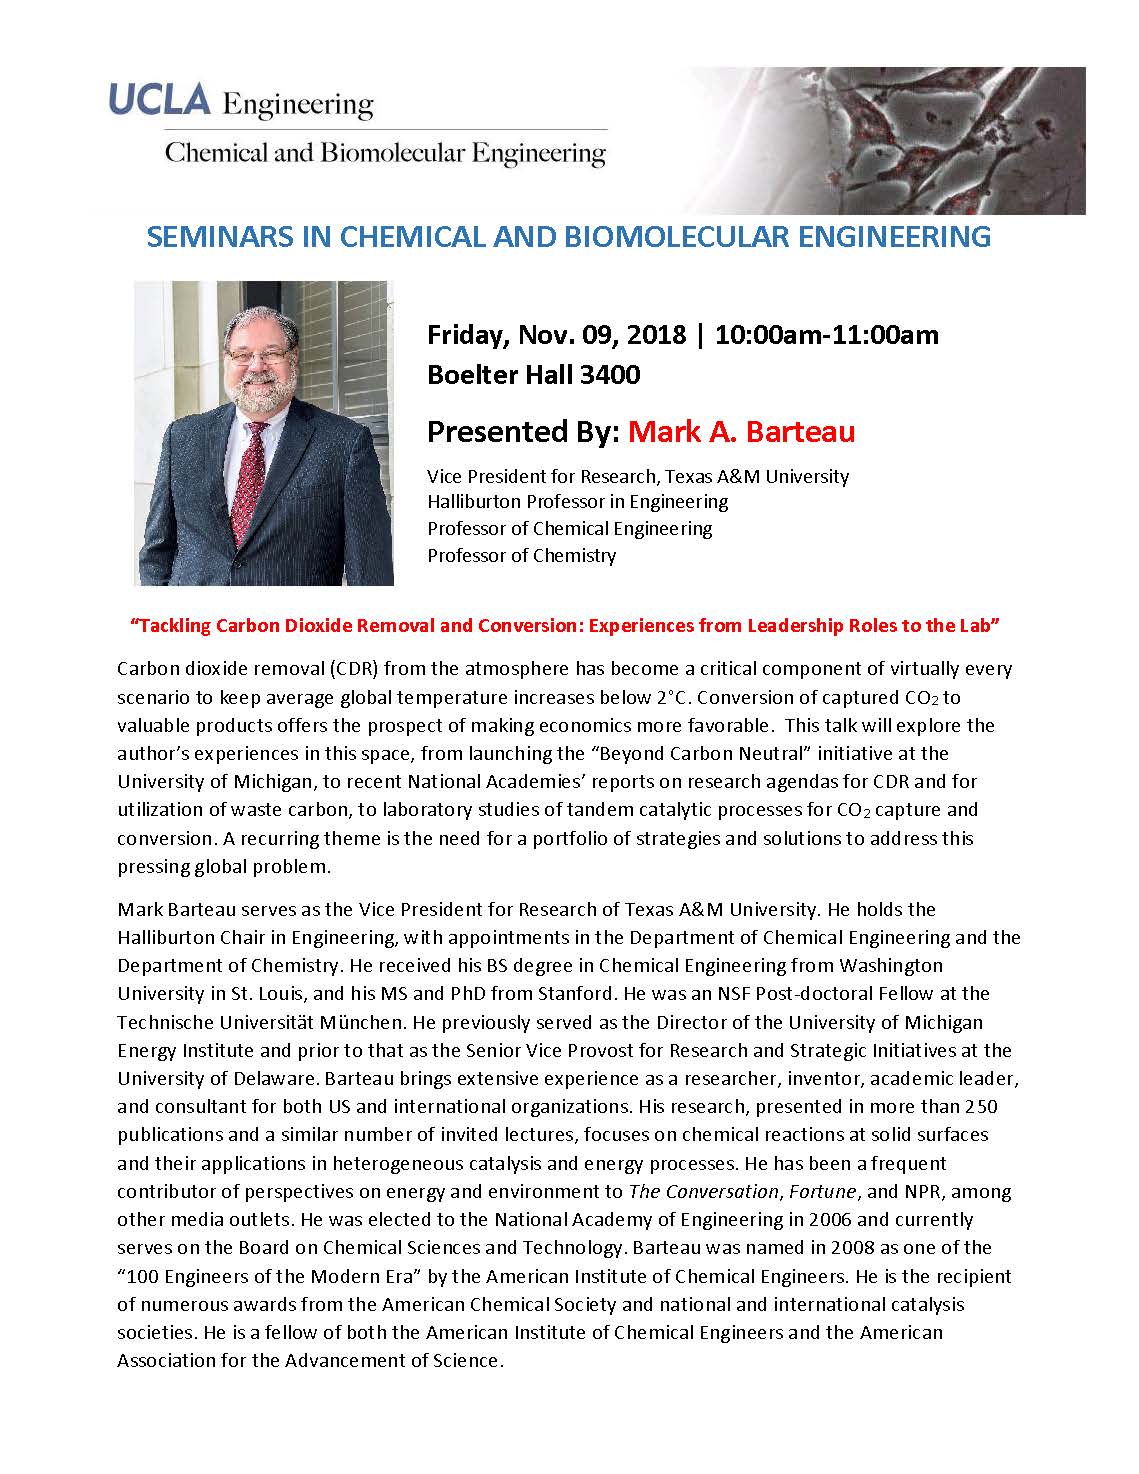 Seminar of Interest – Mark A. Barteau and Chemical & Biomolecular Engineering